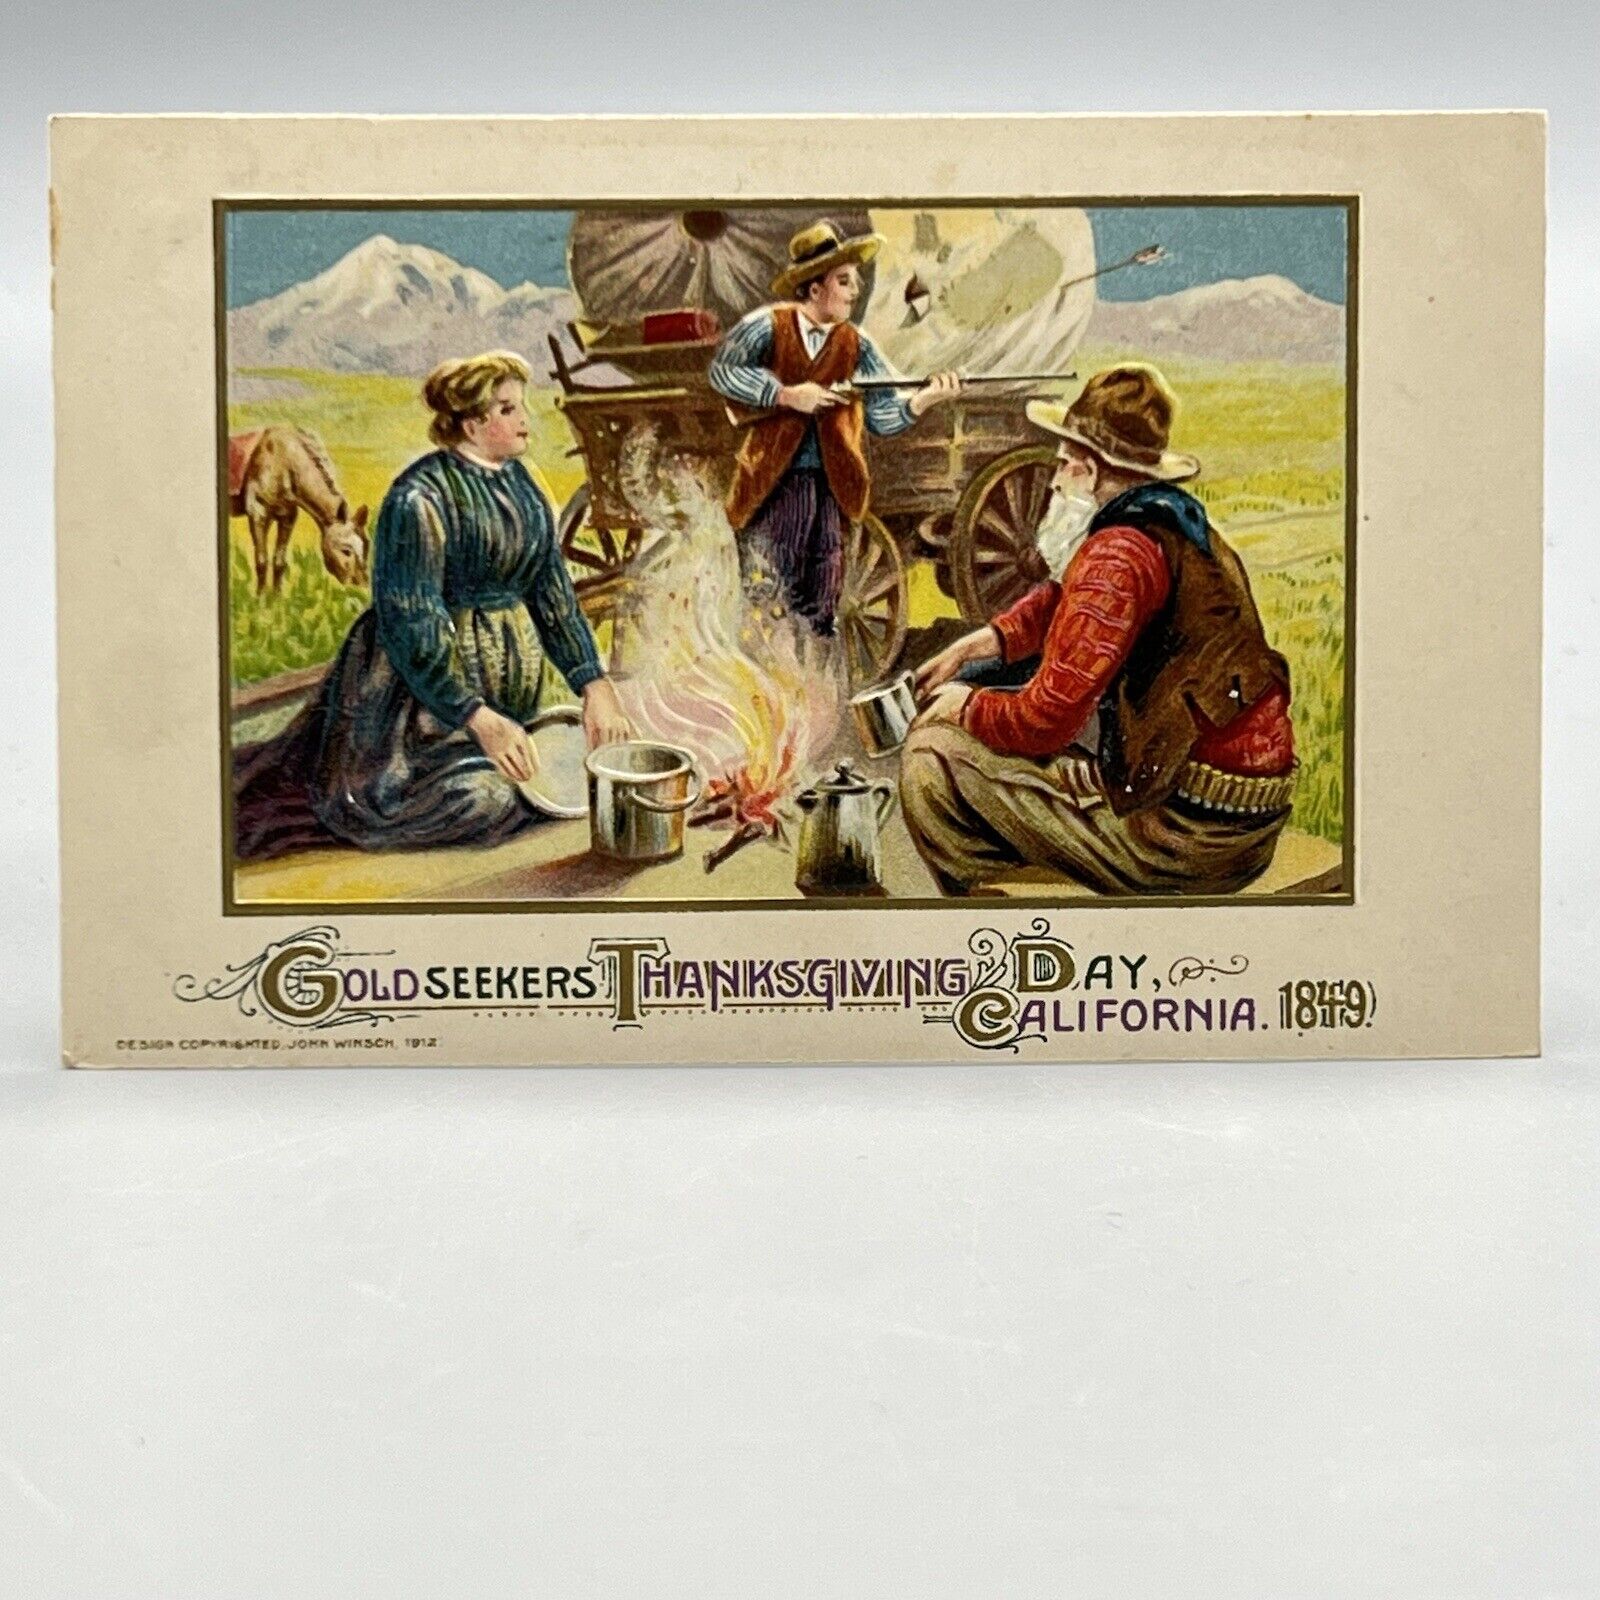 JOHN WINSCH Thanksgiving Day GOLDSEEKERS CALIFORNIA 1849 Germany 1912 Postcard